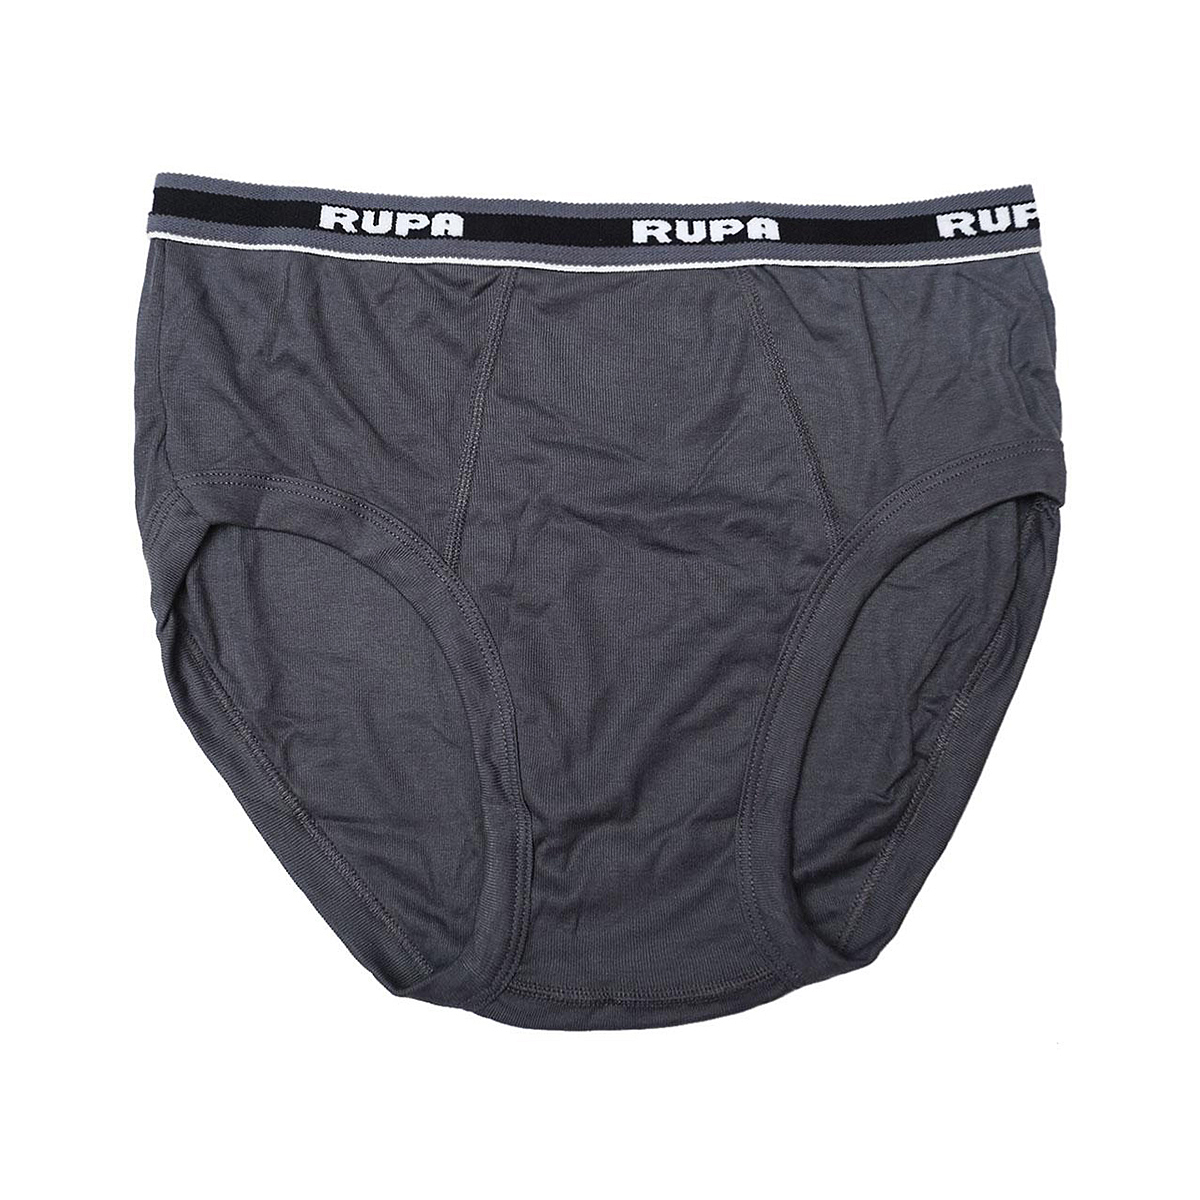 Rupa underwear for men